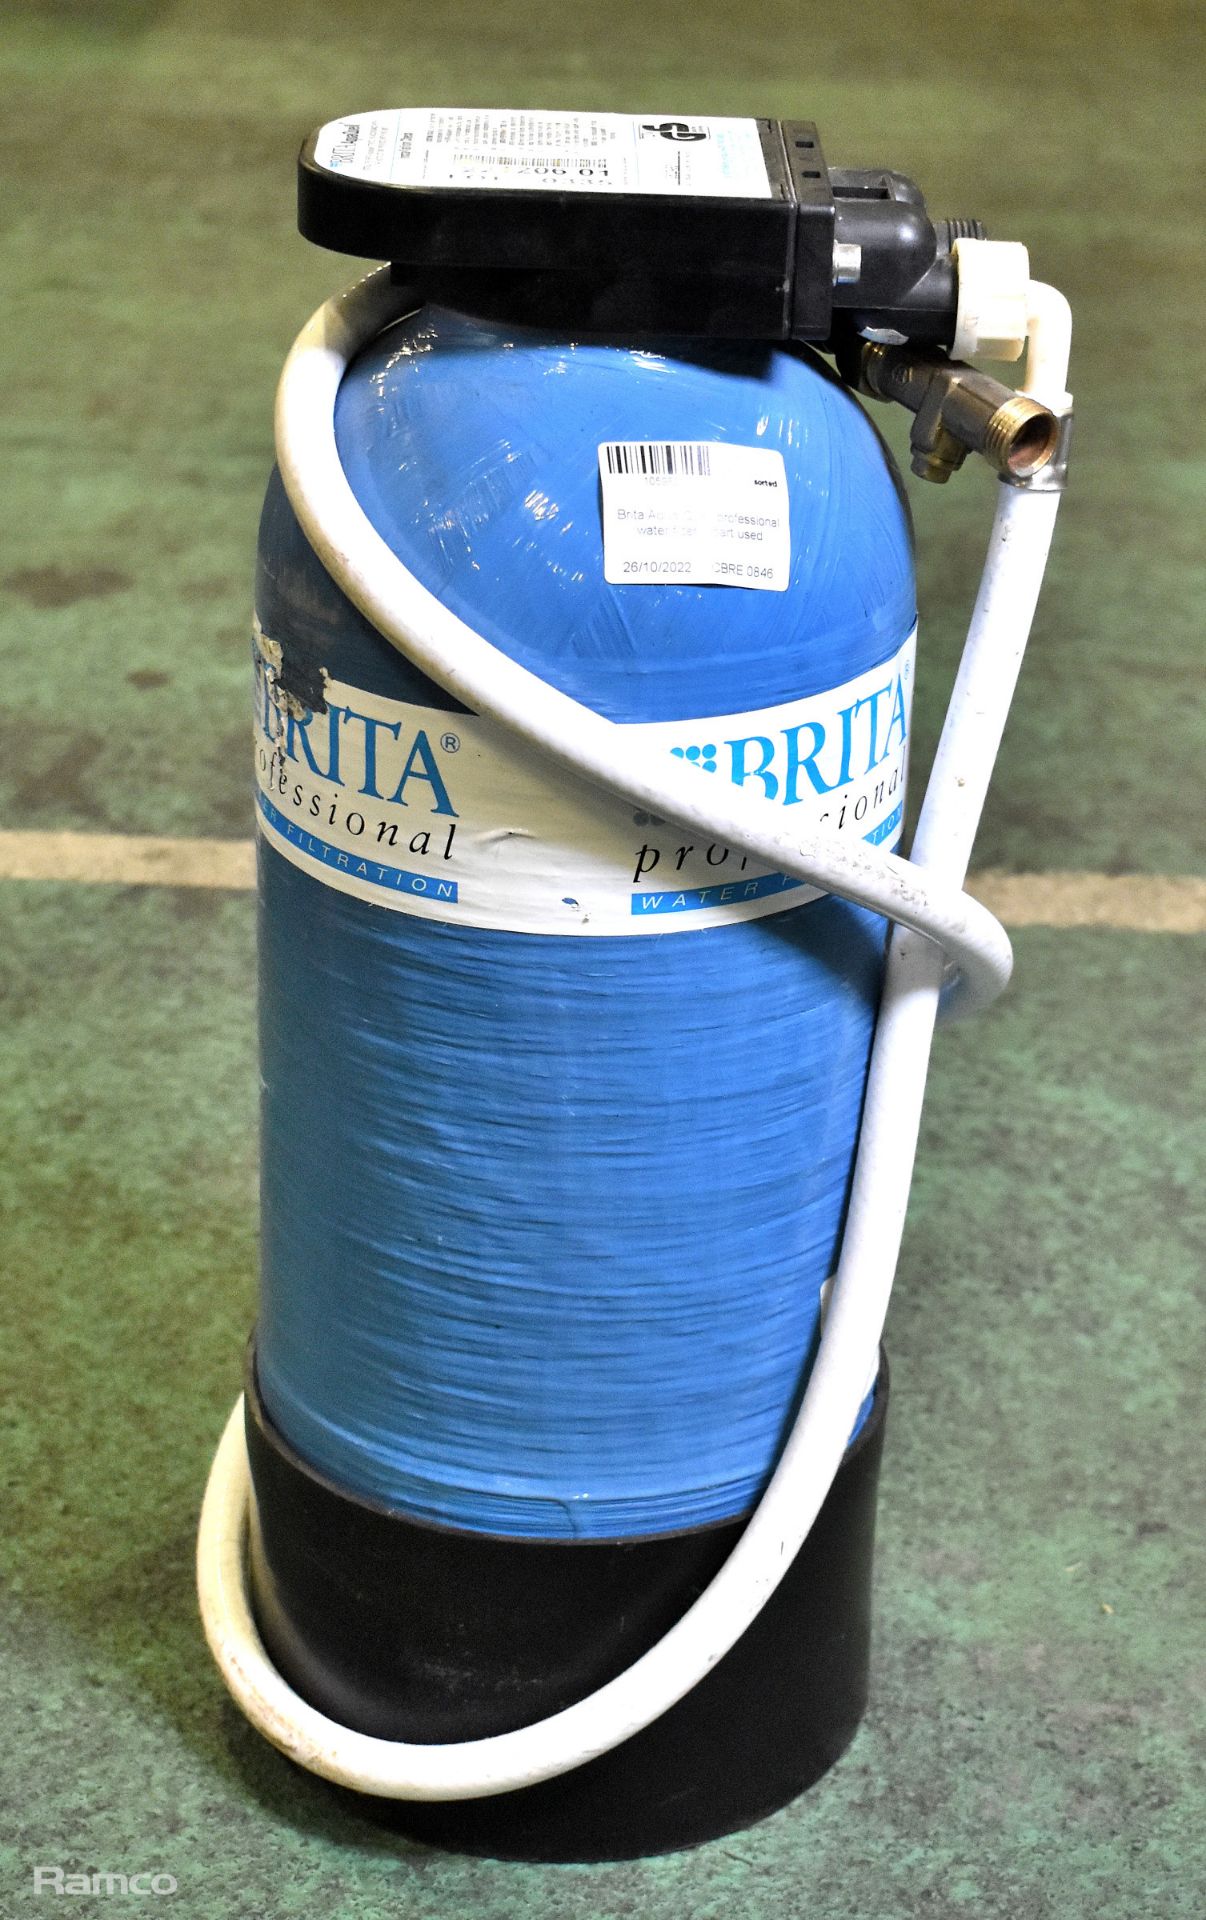 Brita Aqua Quell professional water filter - part used